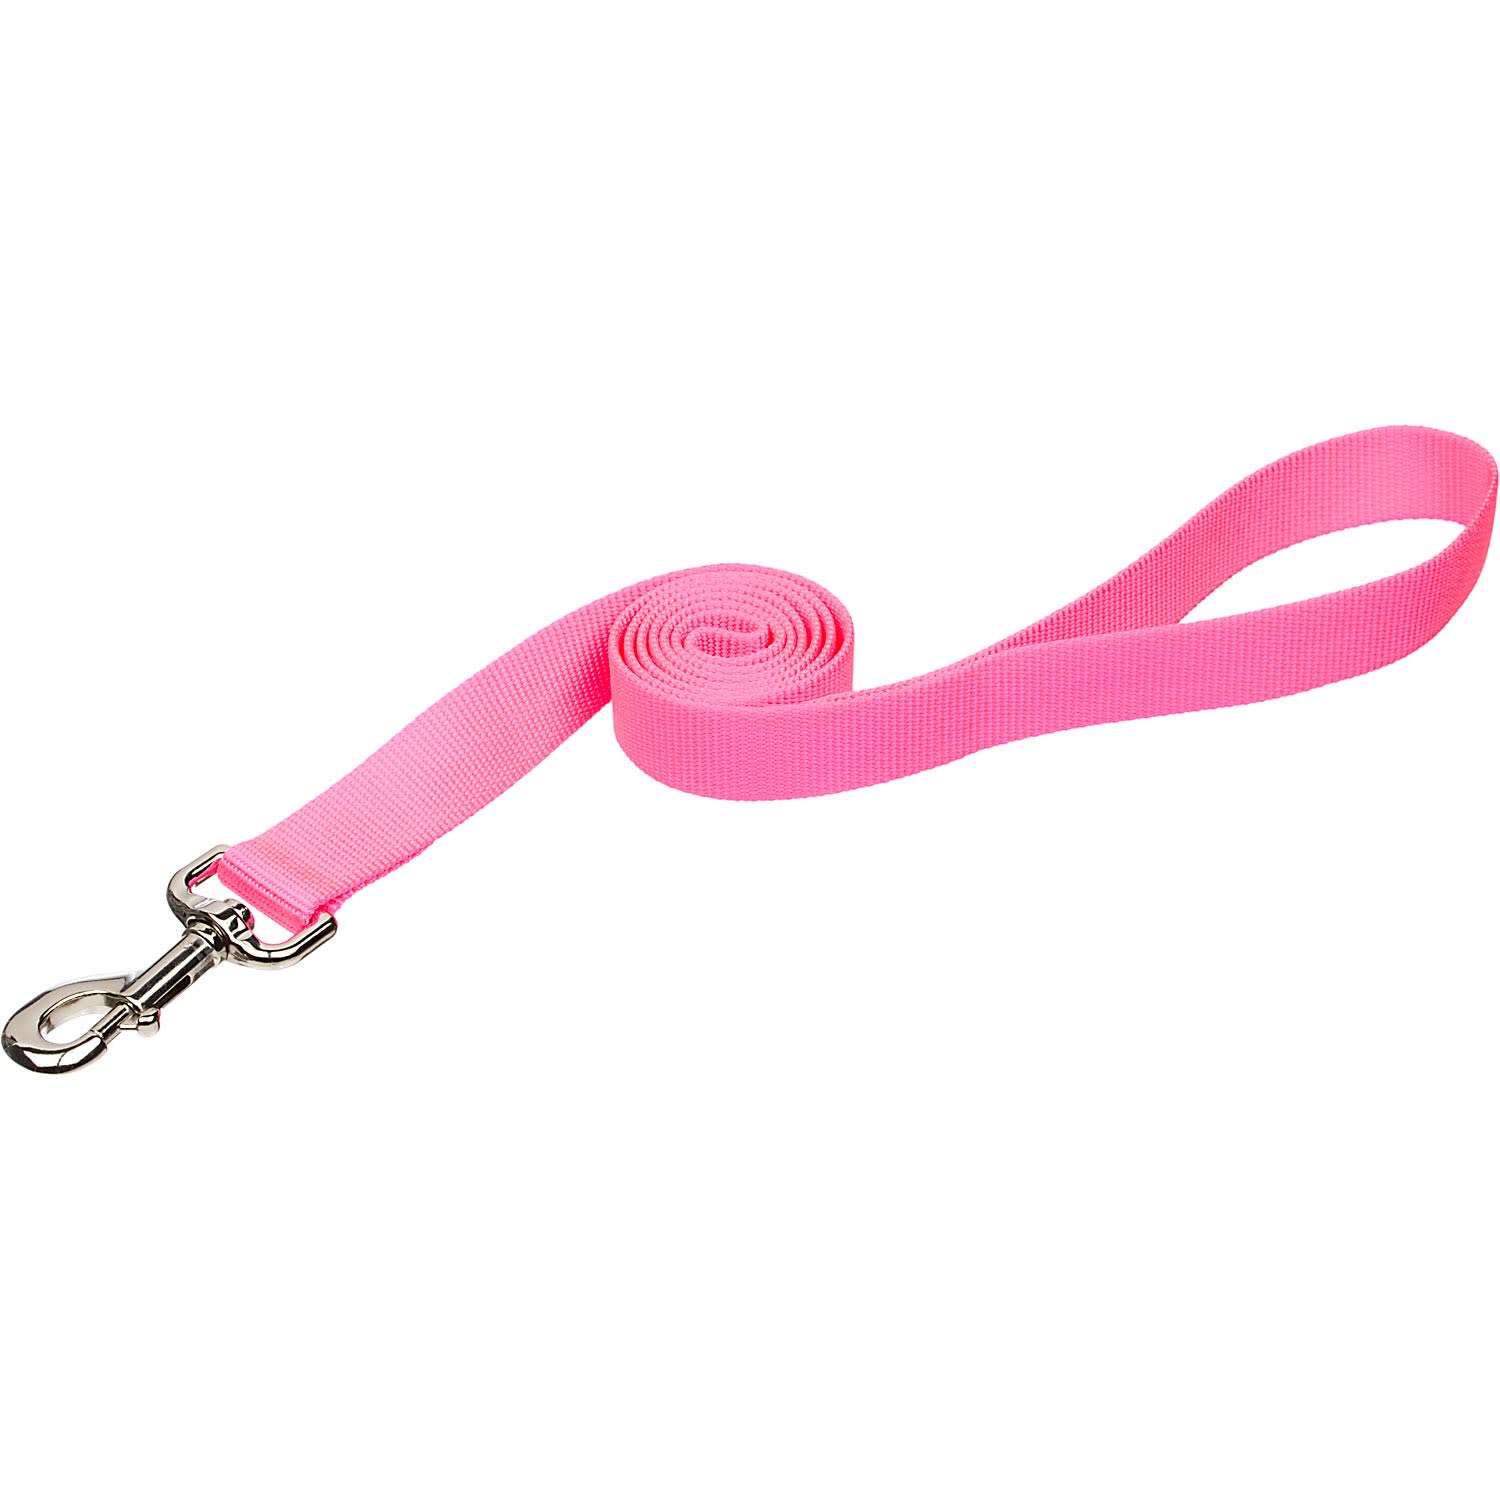 Coastal Pet Nylon Personalized Dog Leash in Neon Pink, 4